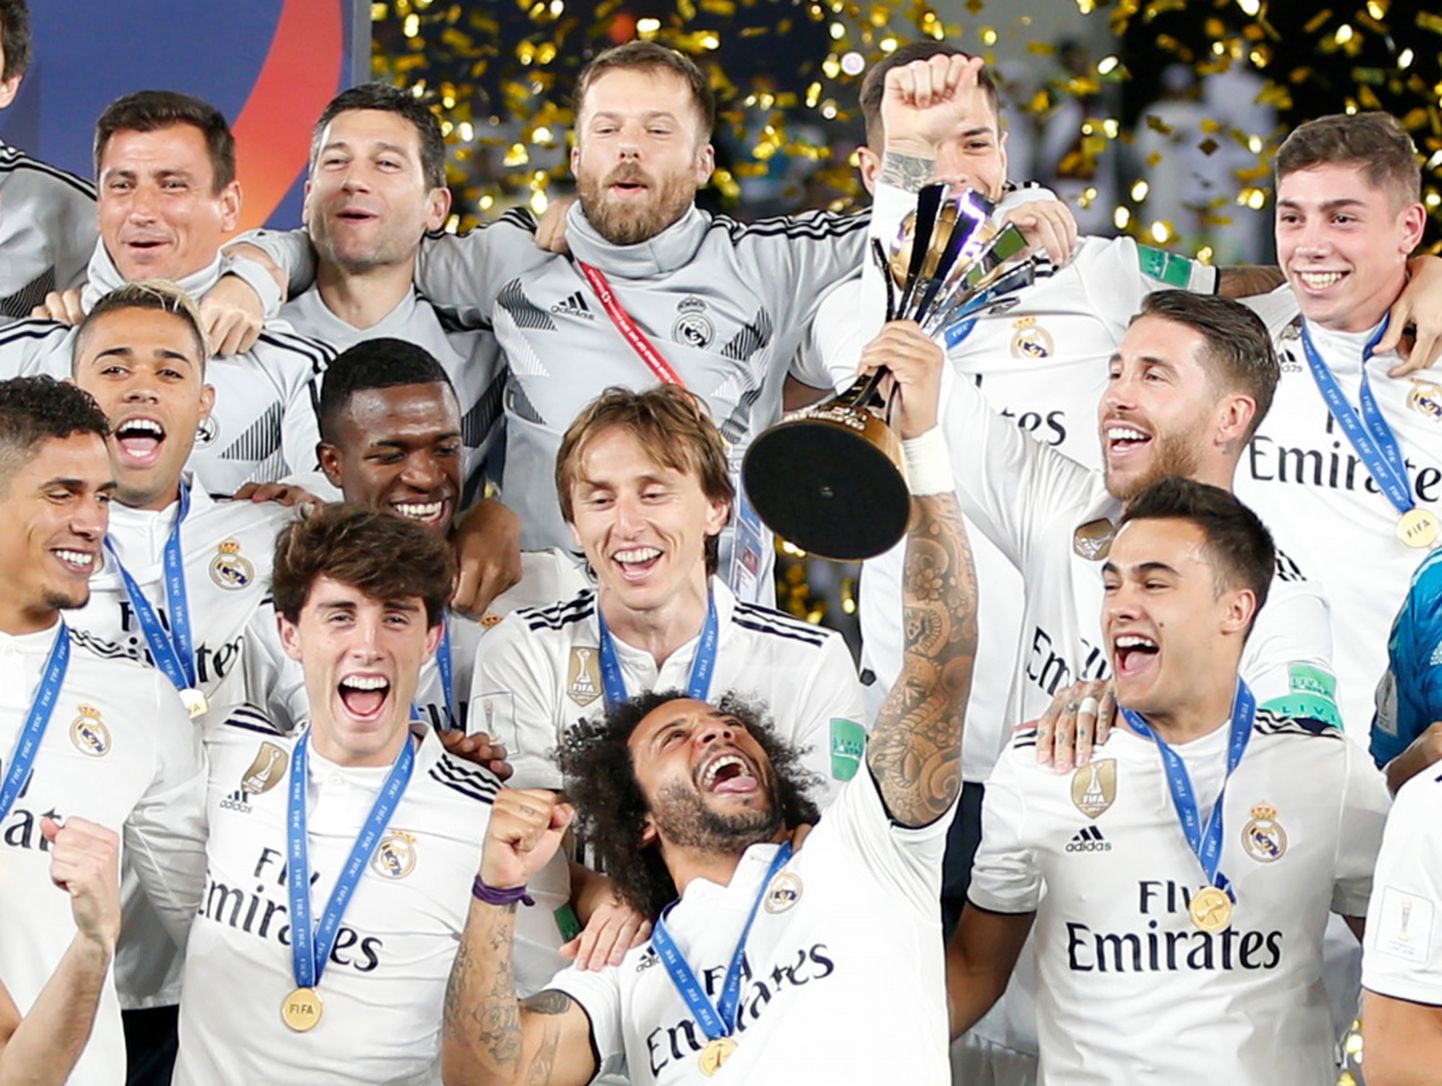 Madrides "Real" triumfs 